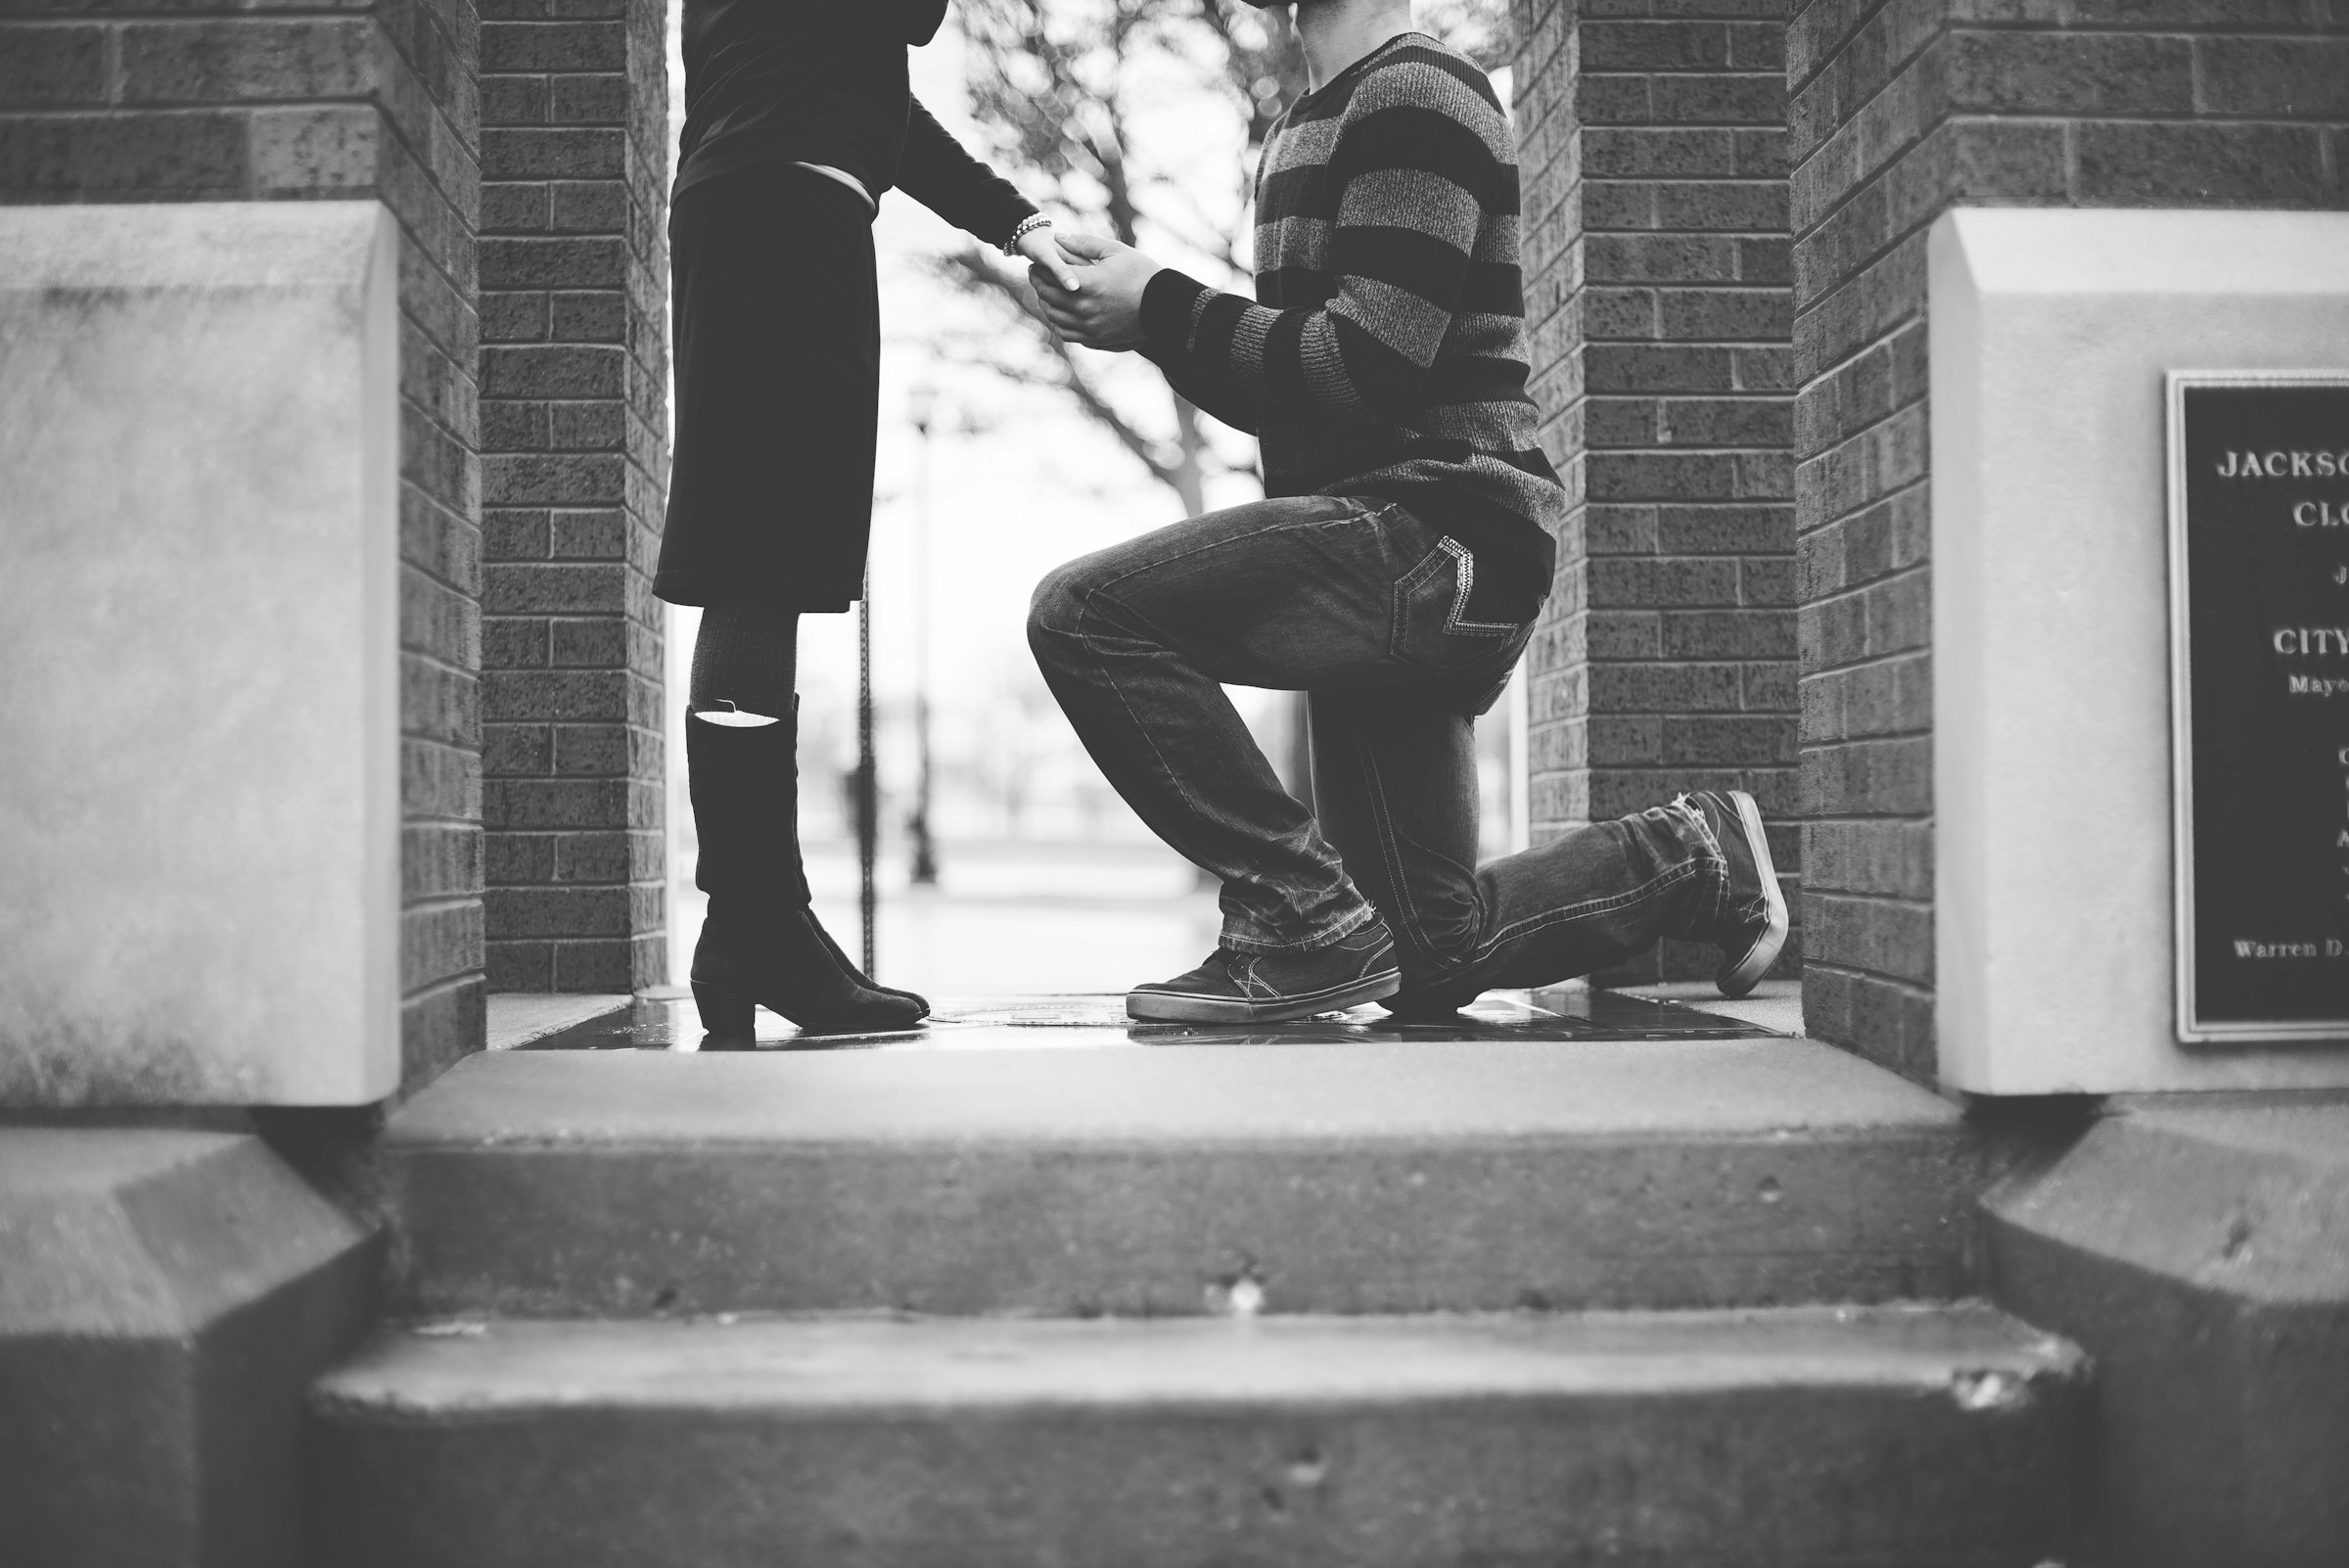 A man proposing to his girlfriend | Source: Unsplash